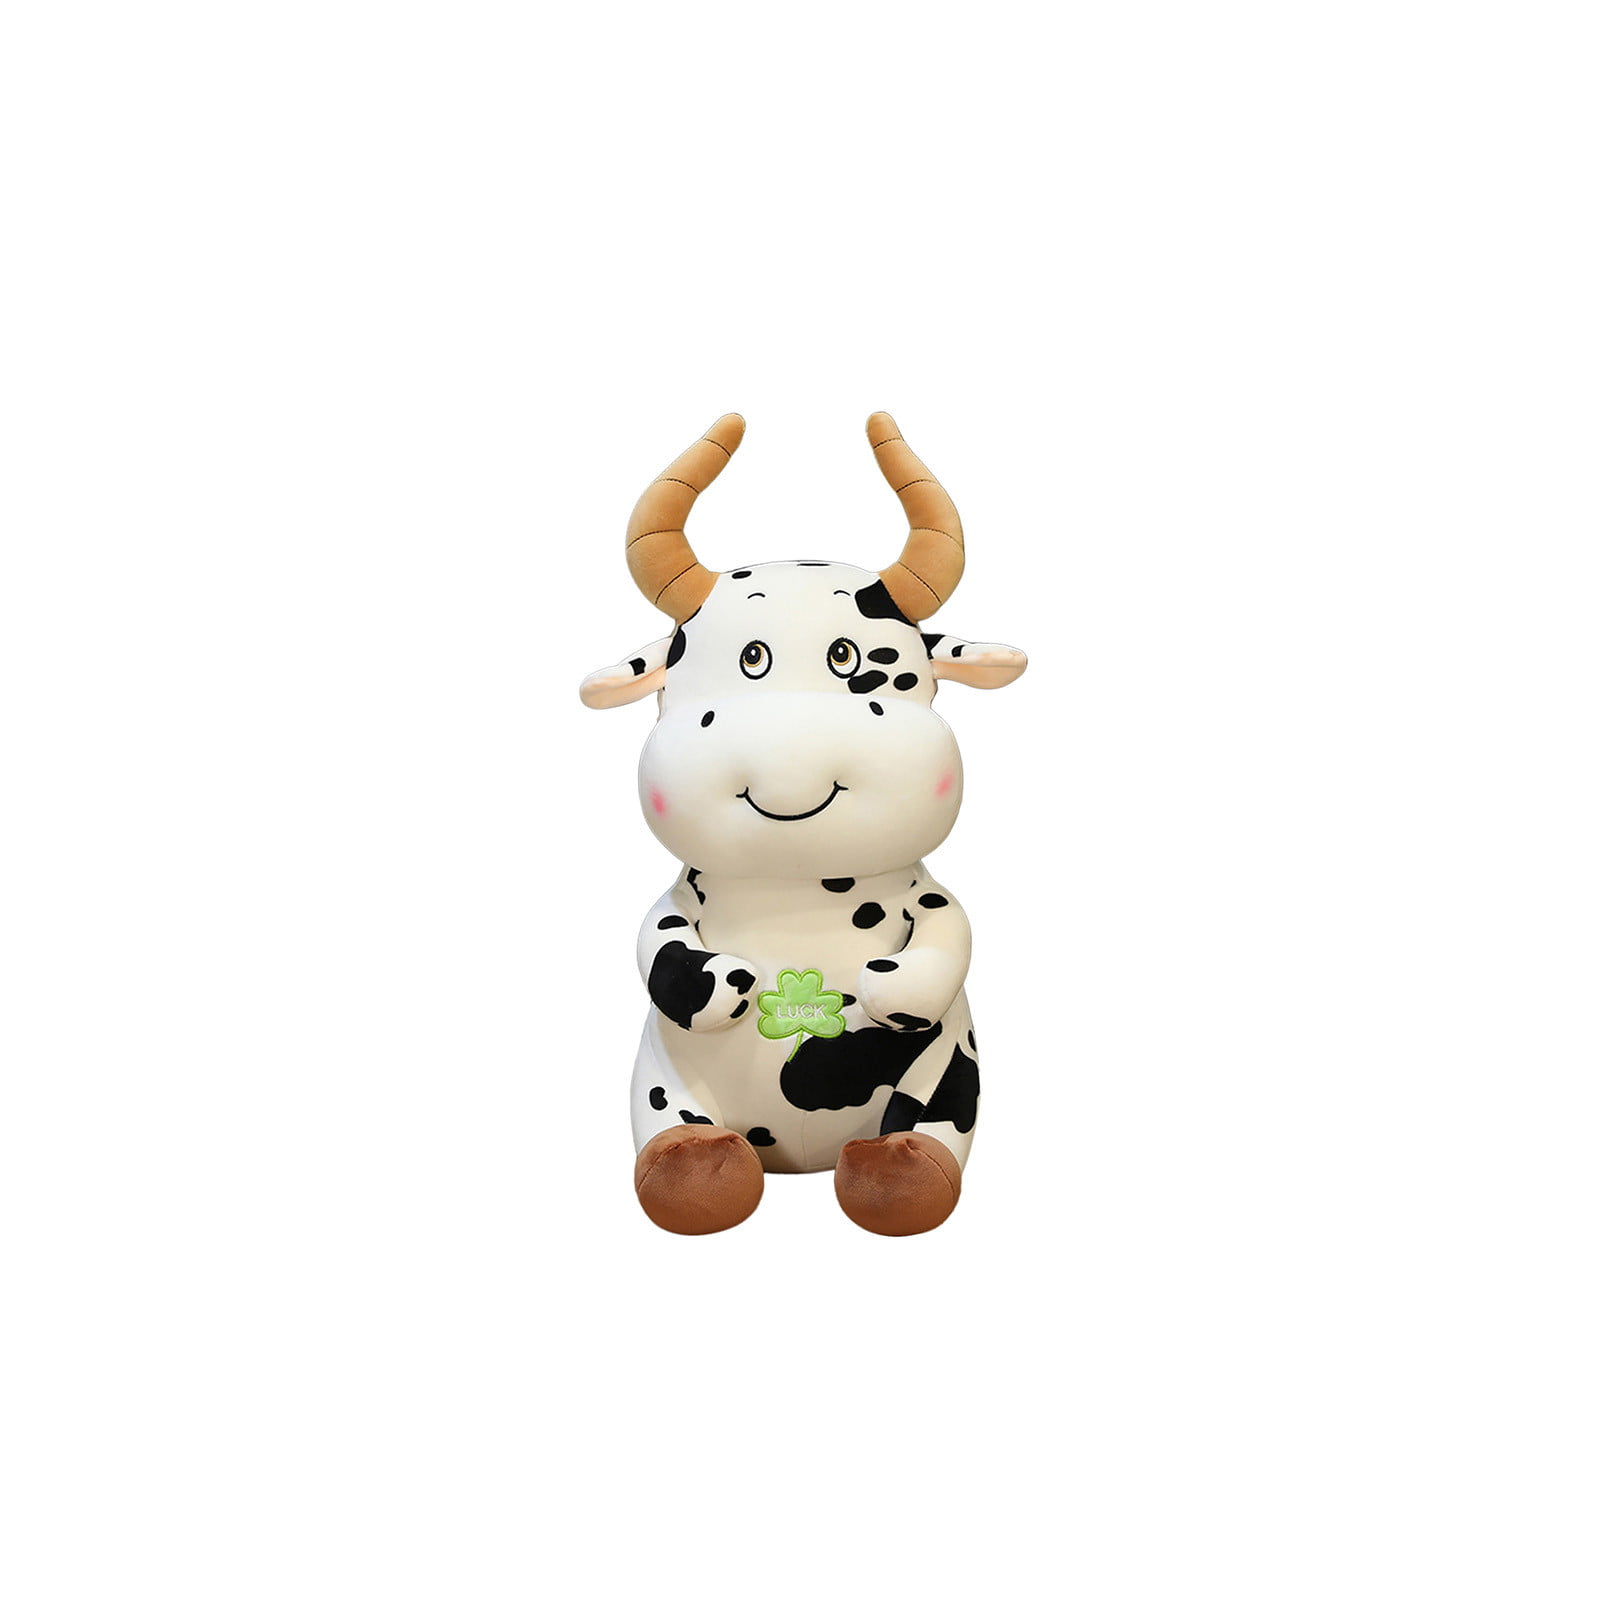 Cow Plush Toy Squish mallow  Pillow Soft Cartoon Doll Cute Kids Gift  30CM 